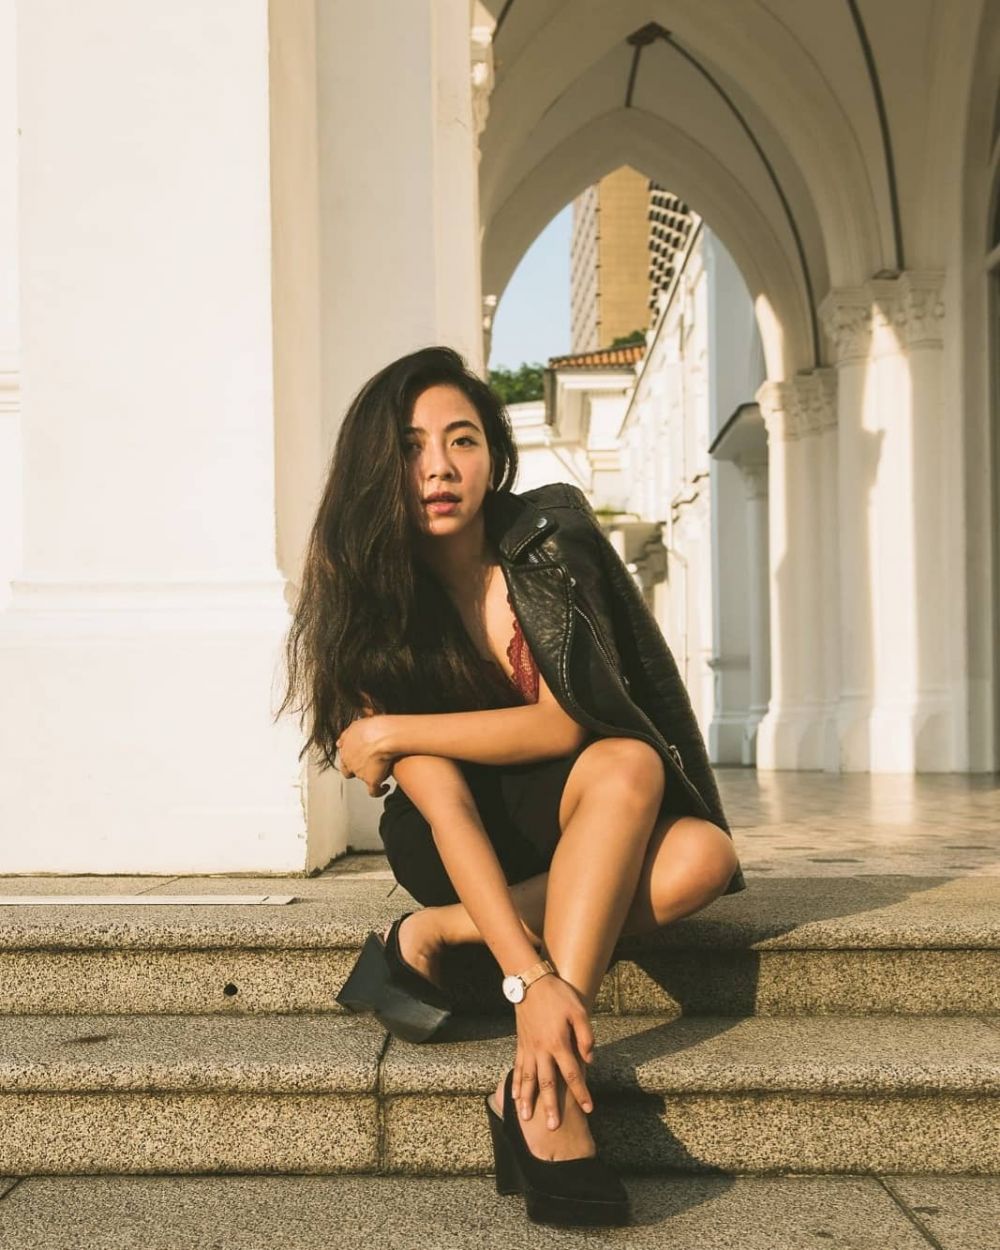 Lama vakum dari dunia hiburan, ini 10 potret terbaru Nadia Vega